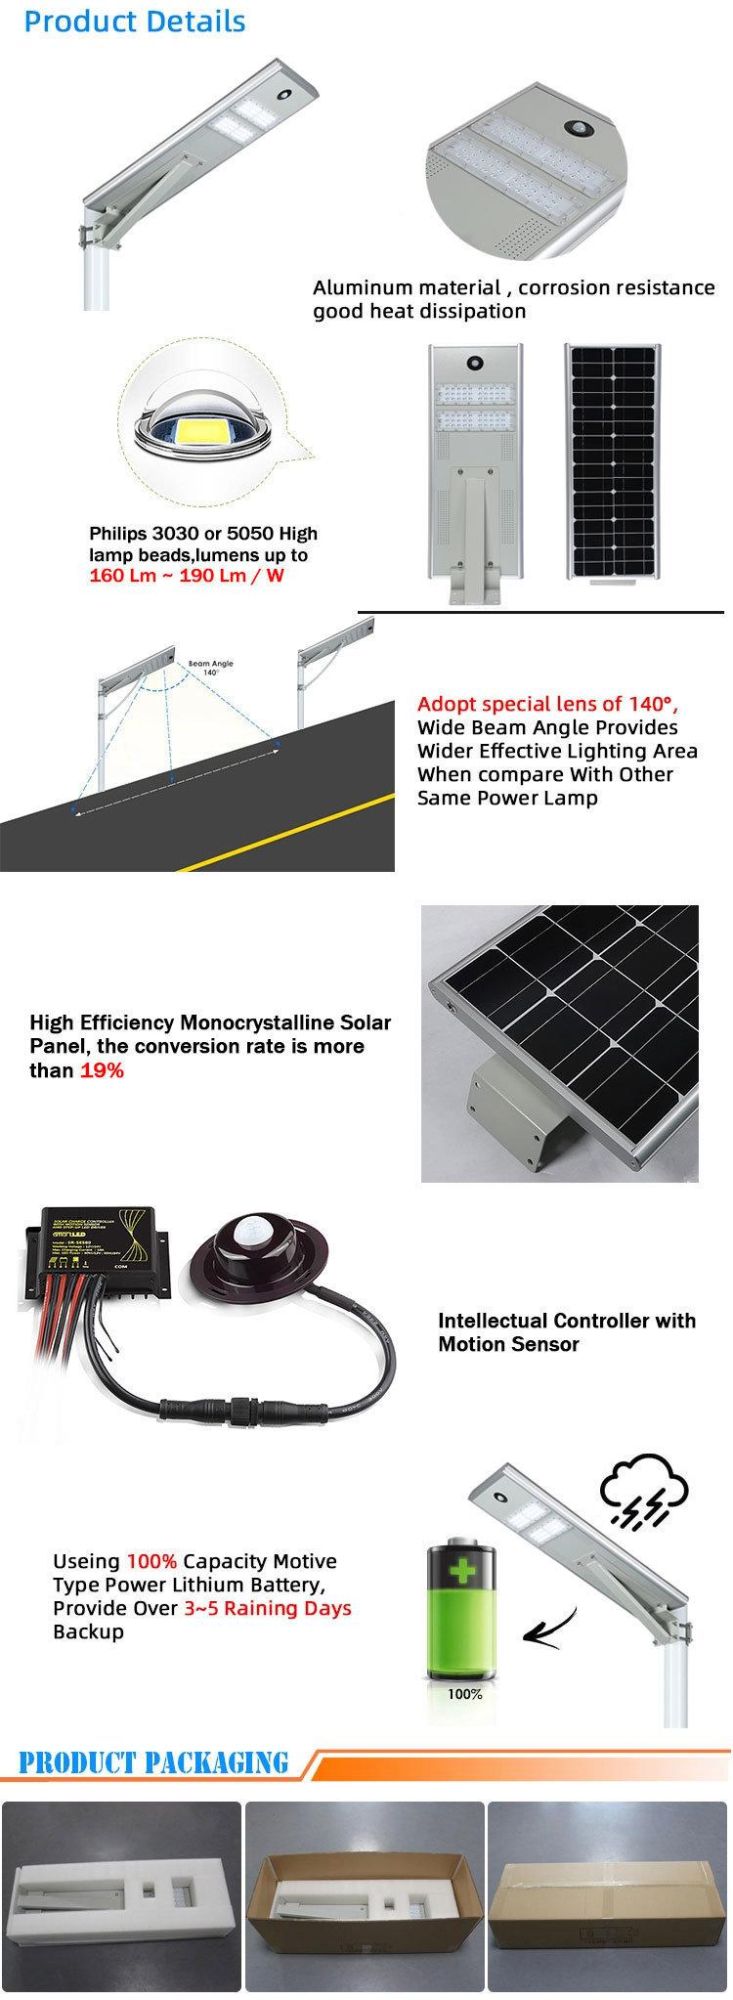 40W LED Outdoor IP65 Waterproof Integrated Solar Street Light